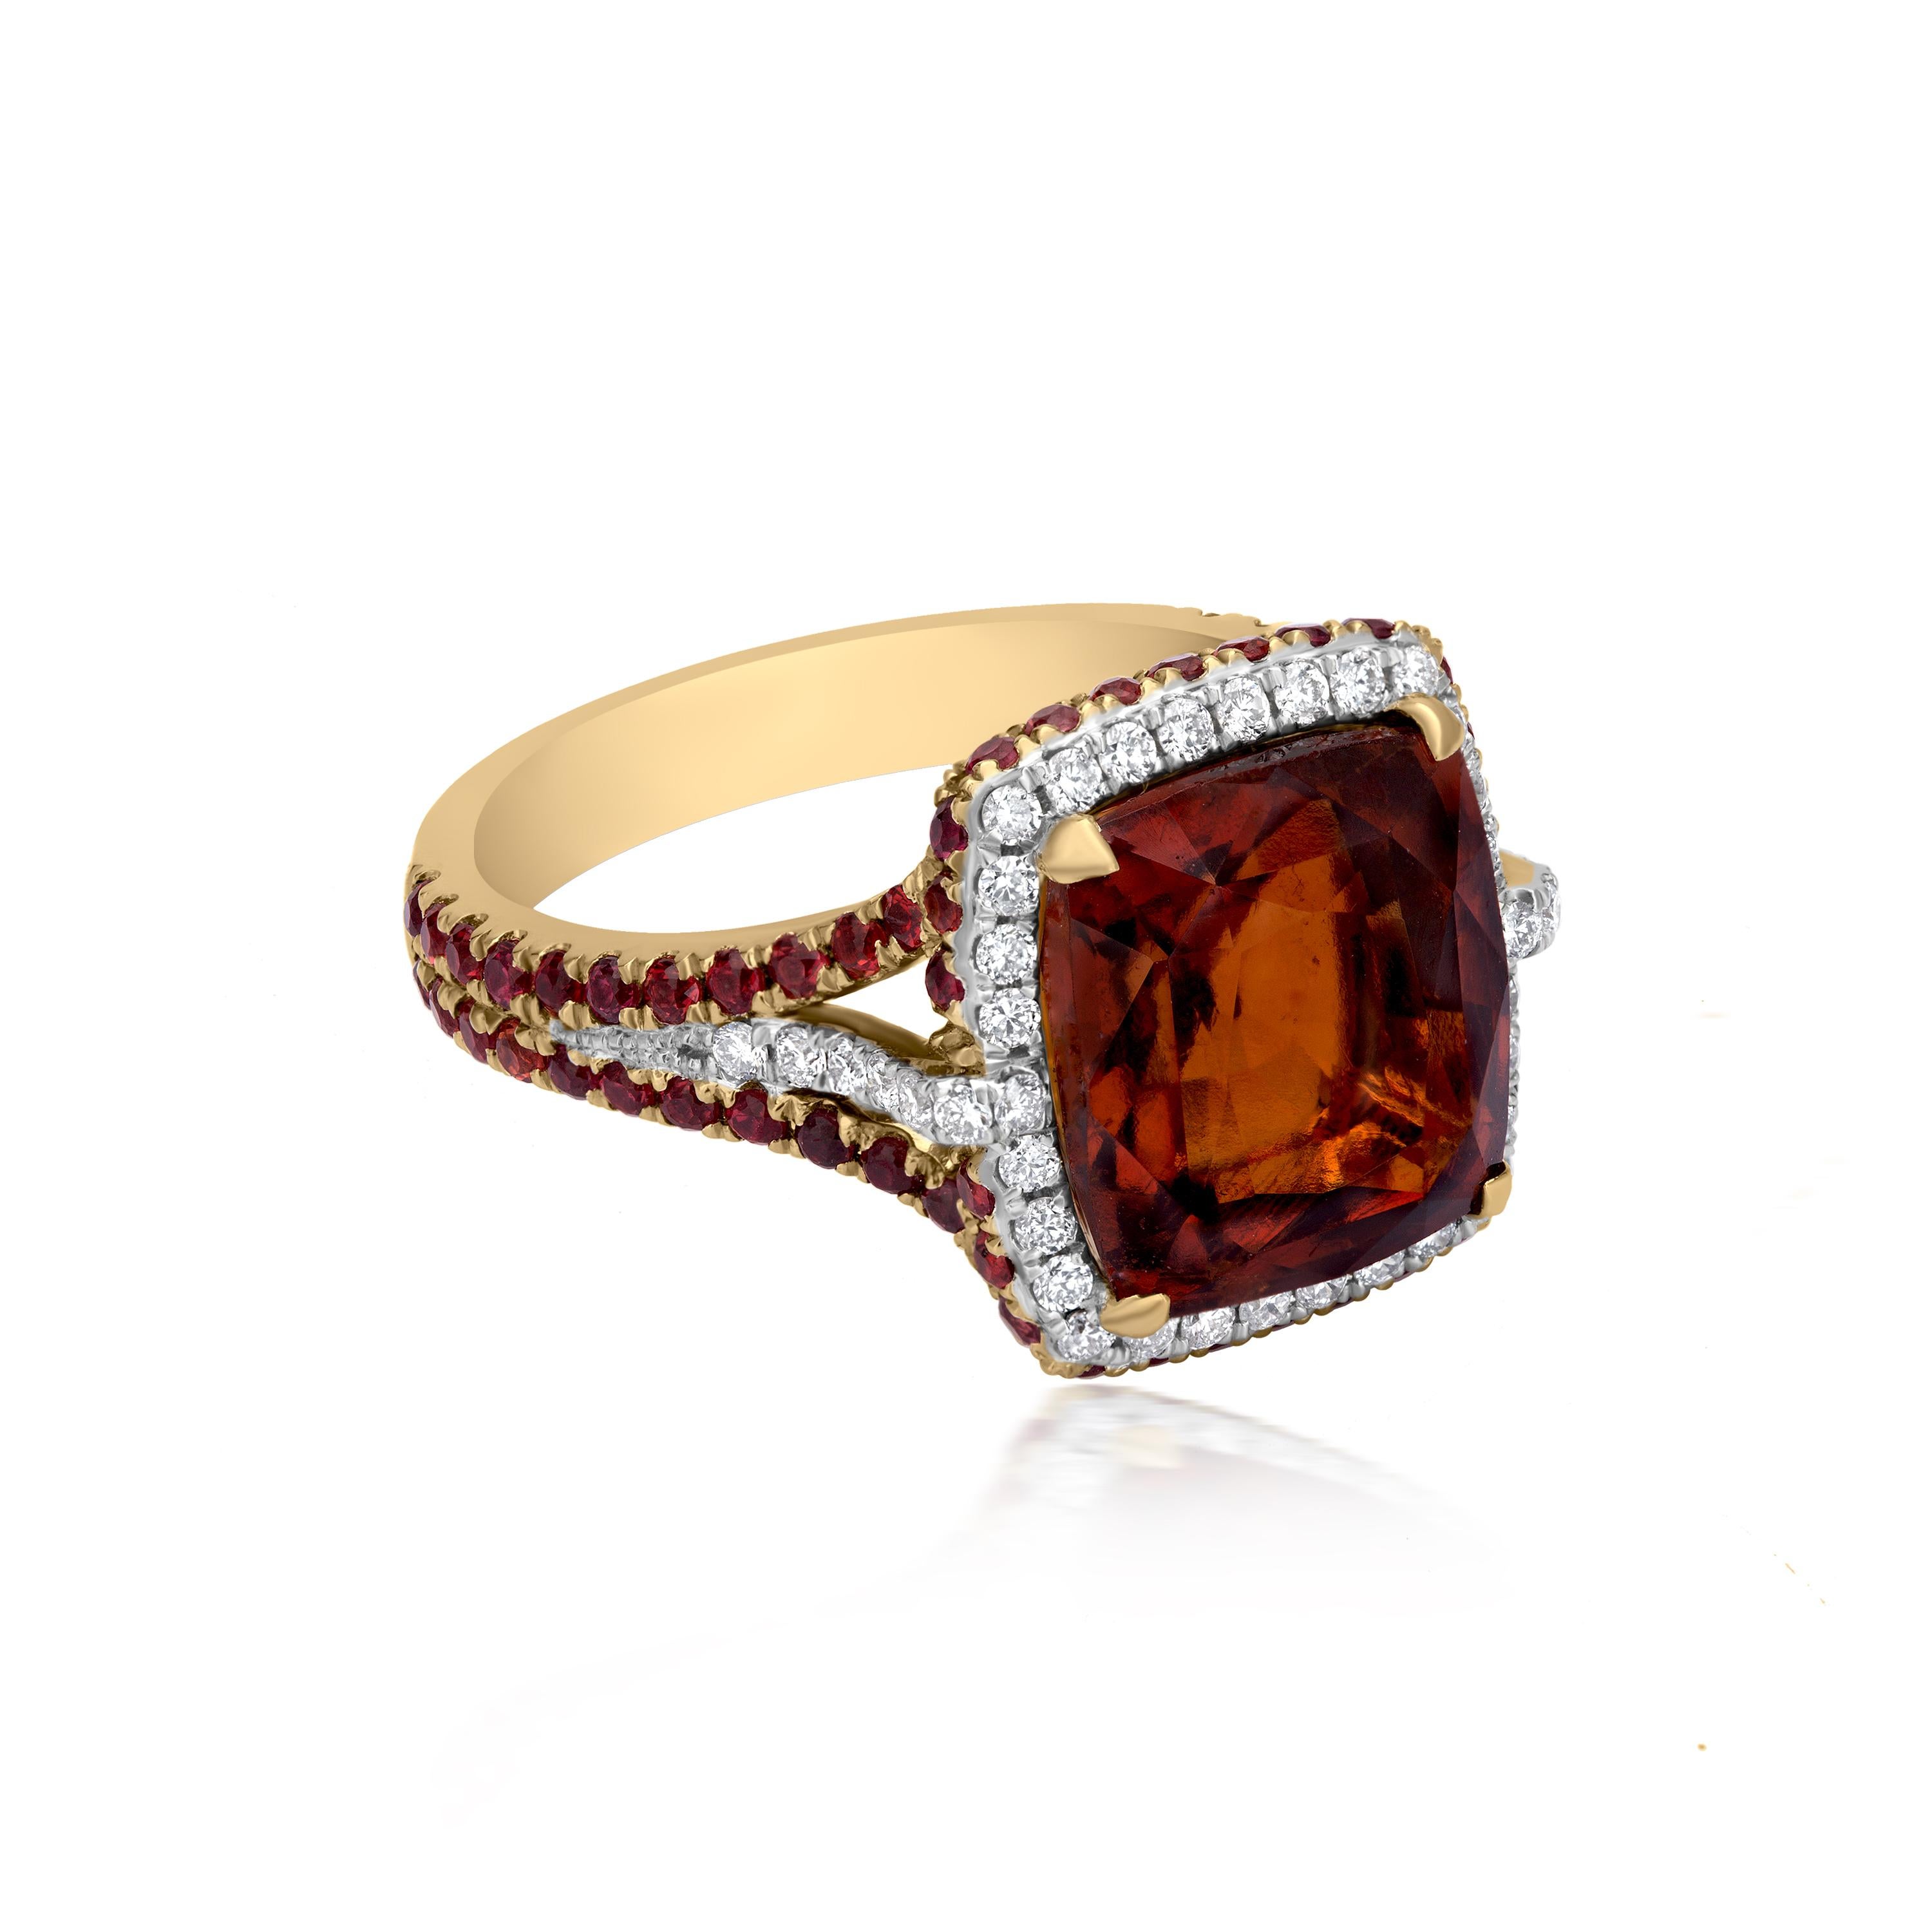 Contemporary Gemistry 8.25 Cttw. Garnet, Orange Sapphire and Diamond Ring in 18k Yellow Gold